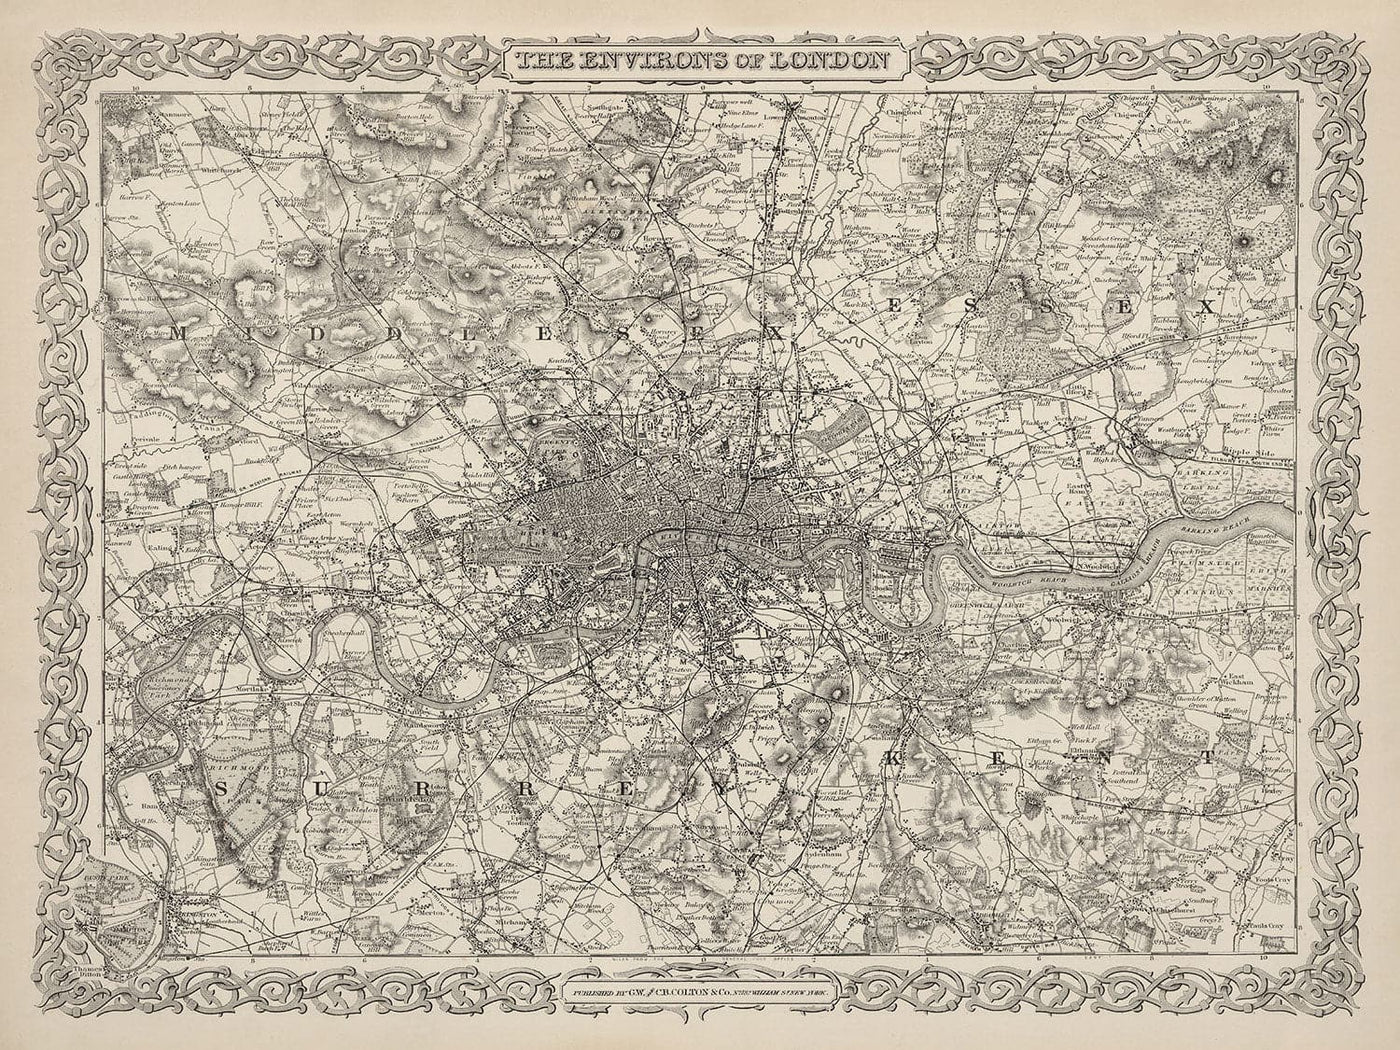 Environs of London, por G.W. Colton, 1886